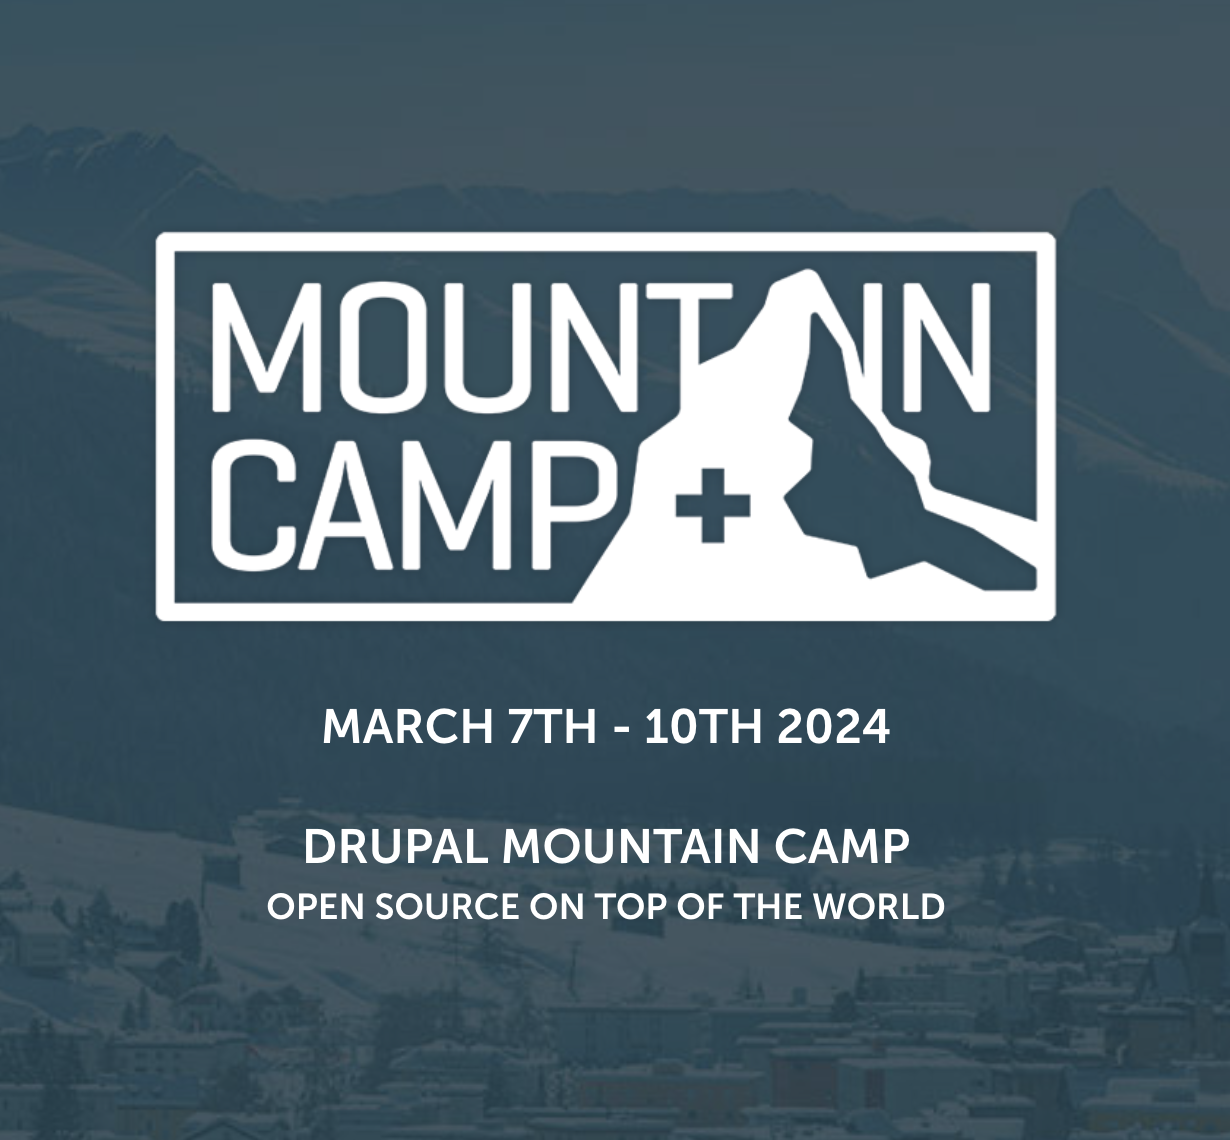 Drupal Mountain Camp 2024